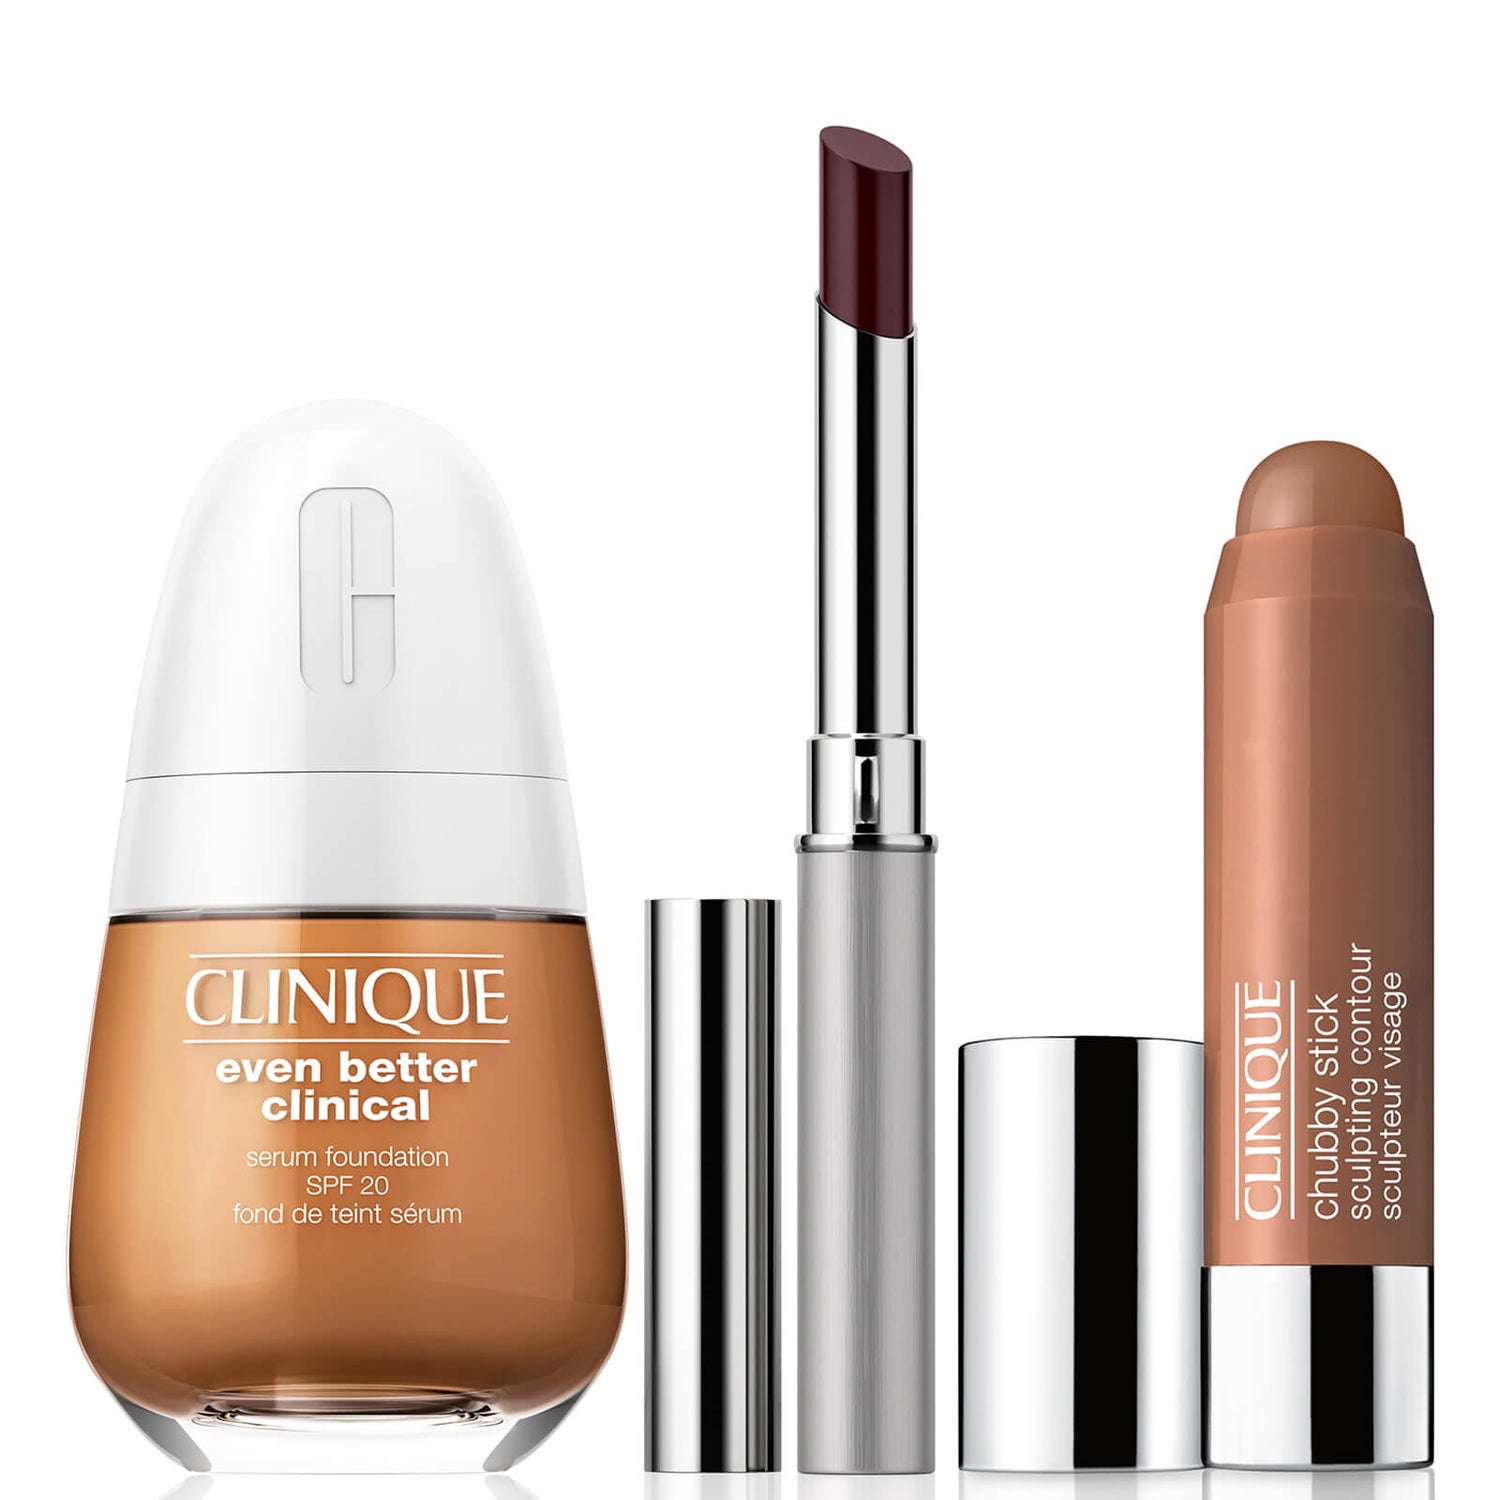 Clinique Exclusive Top Trending Makeup Bundle (Various Shades) (Worth £82.00)